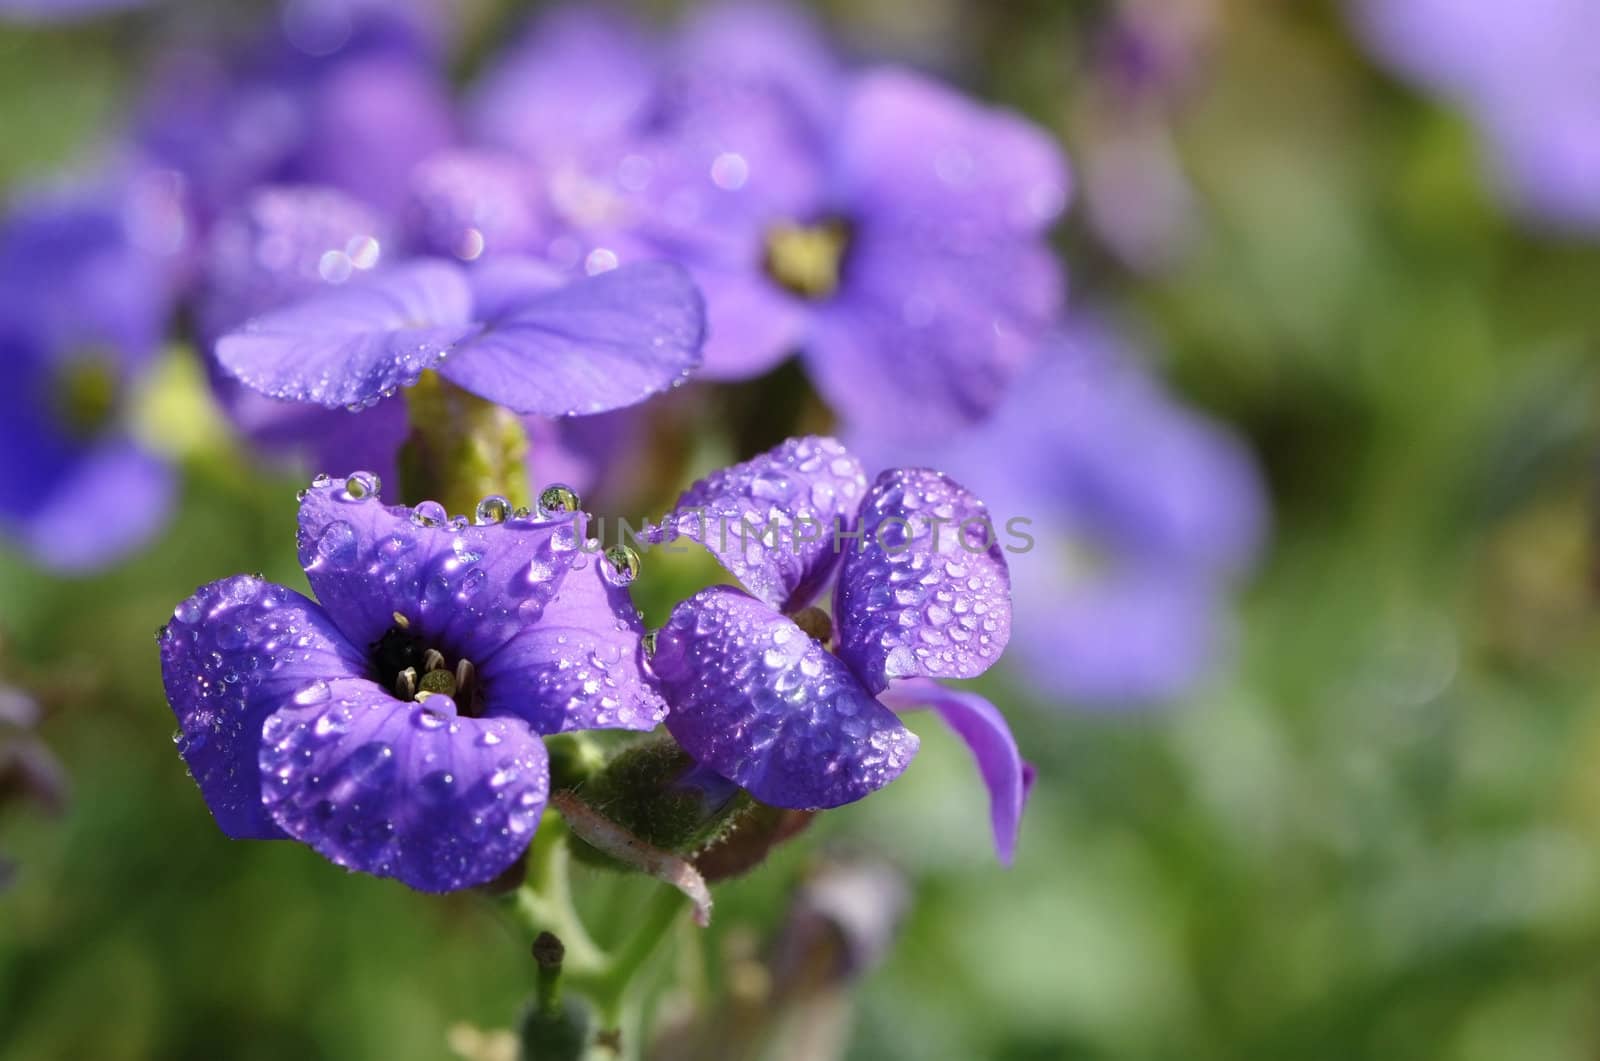 Water Droplets on Purple Flowers by shkyo30